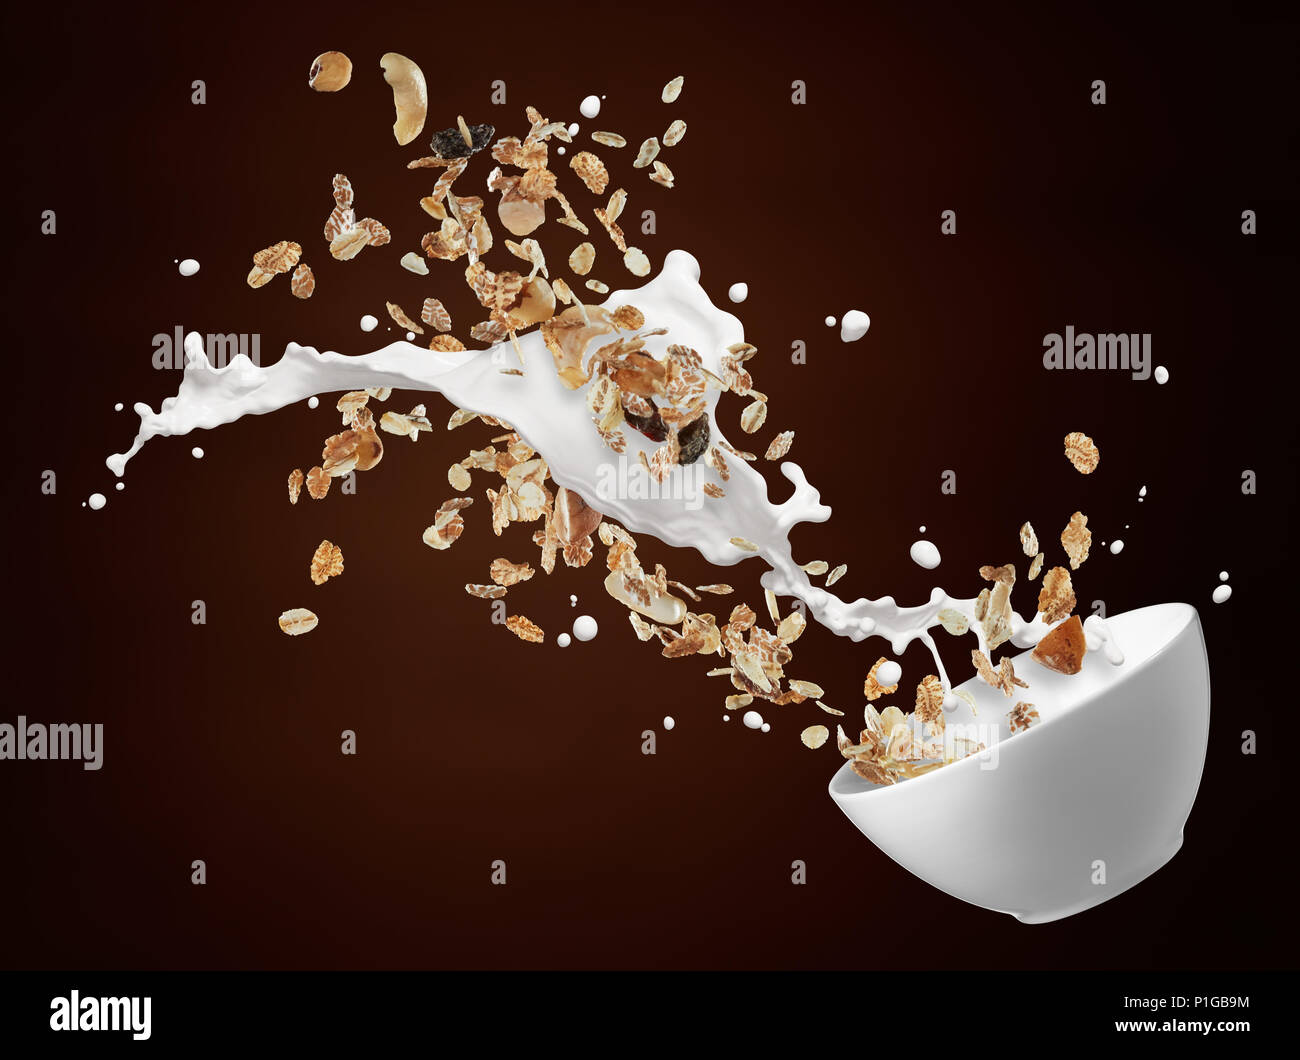 bowl of muesli with milk splash against brown background Stock Photo